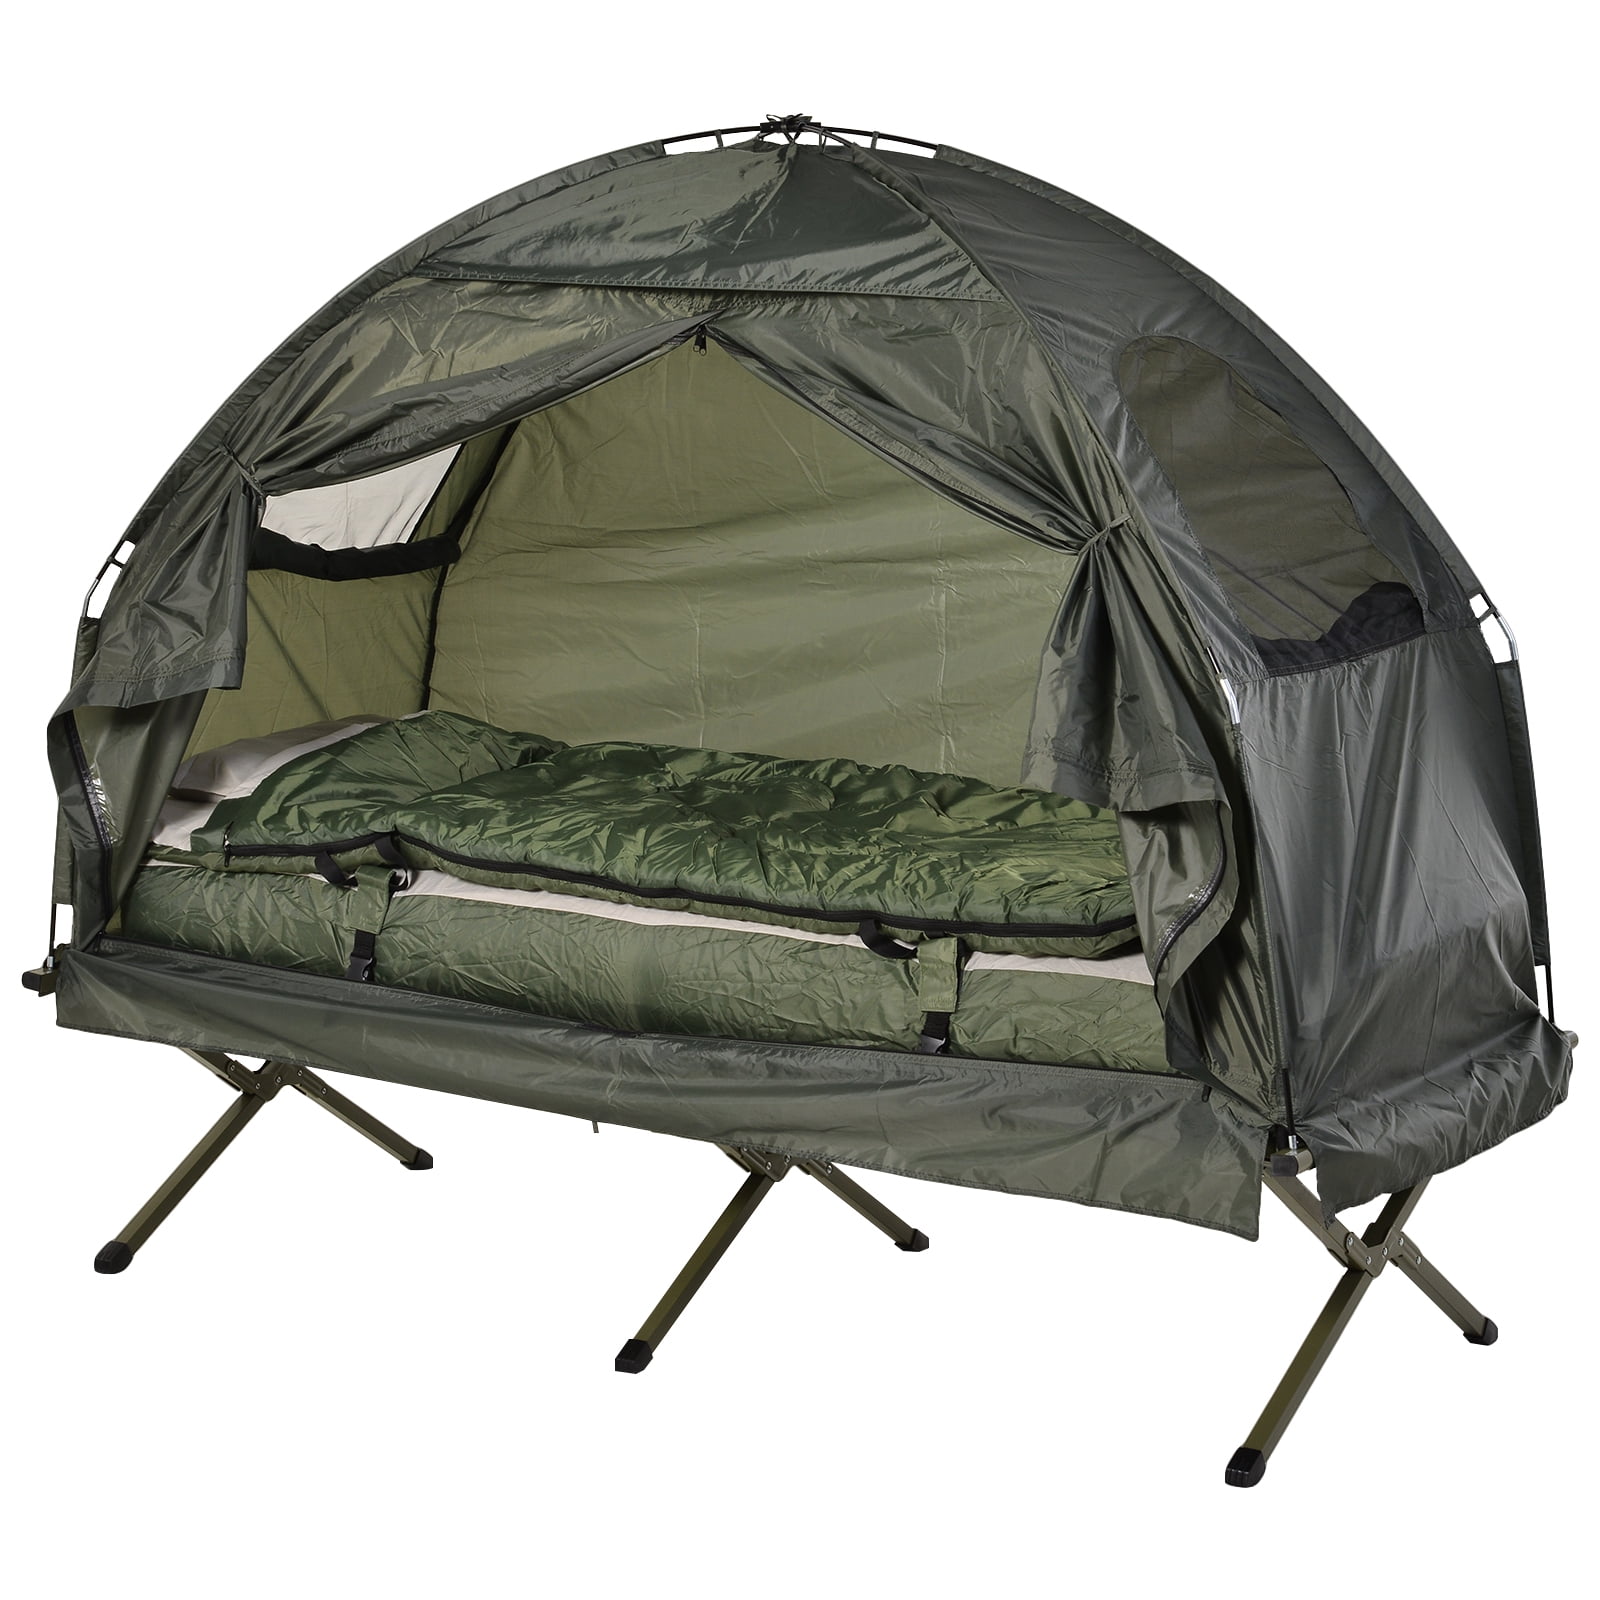 walmart folding camping cot